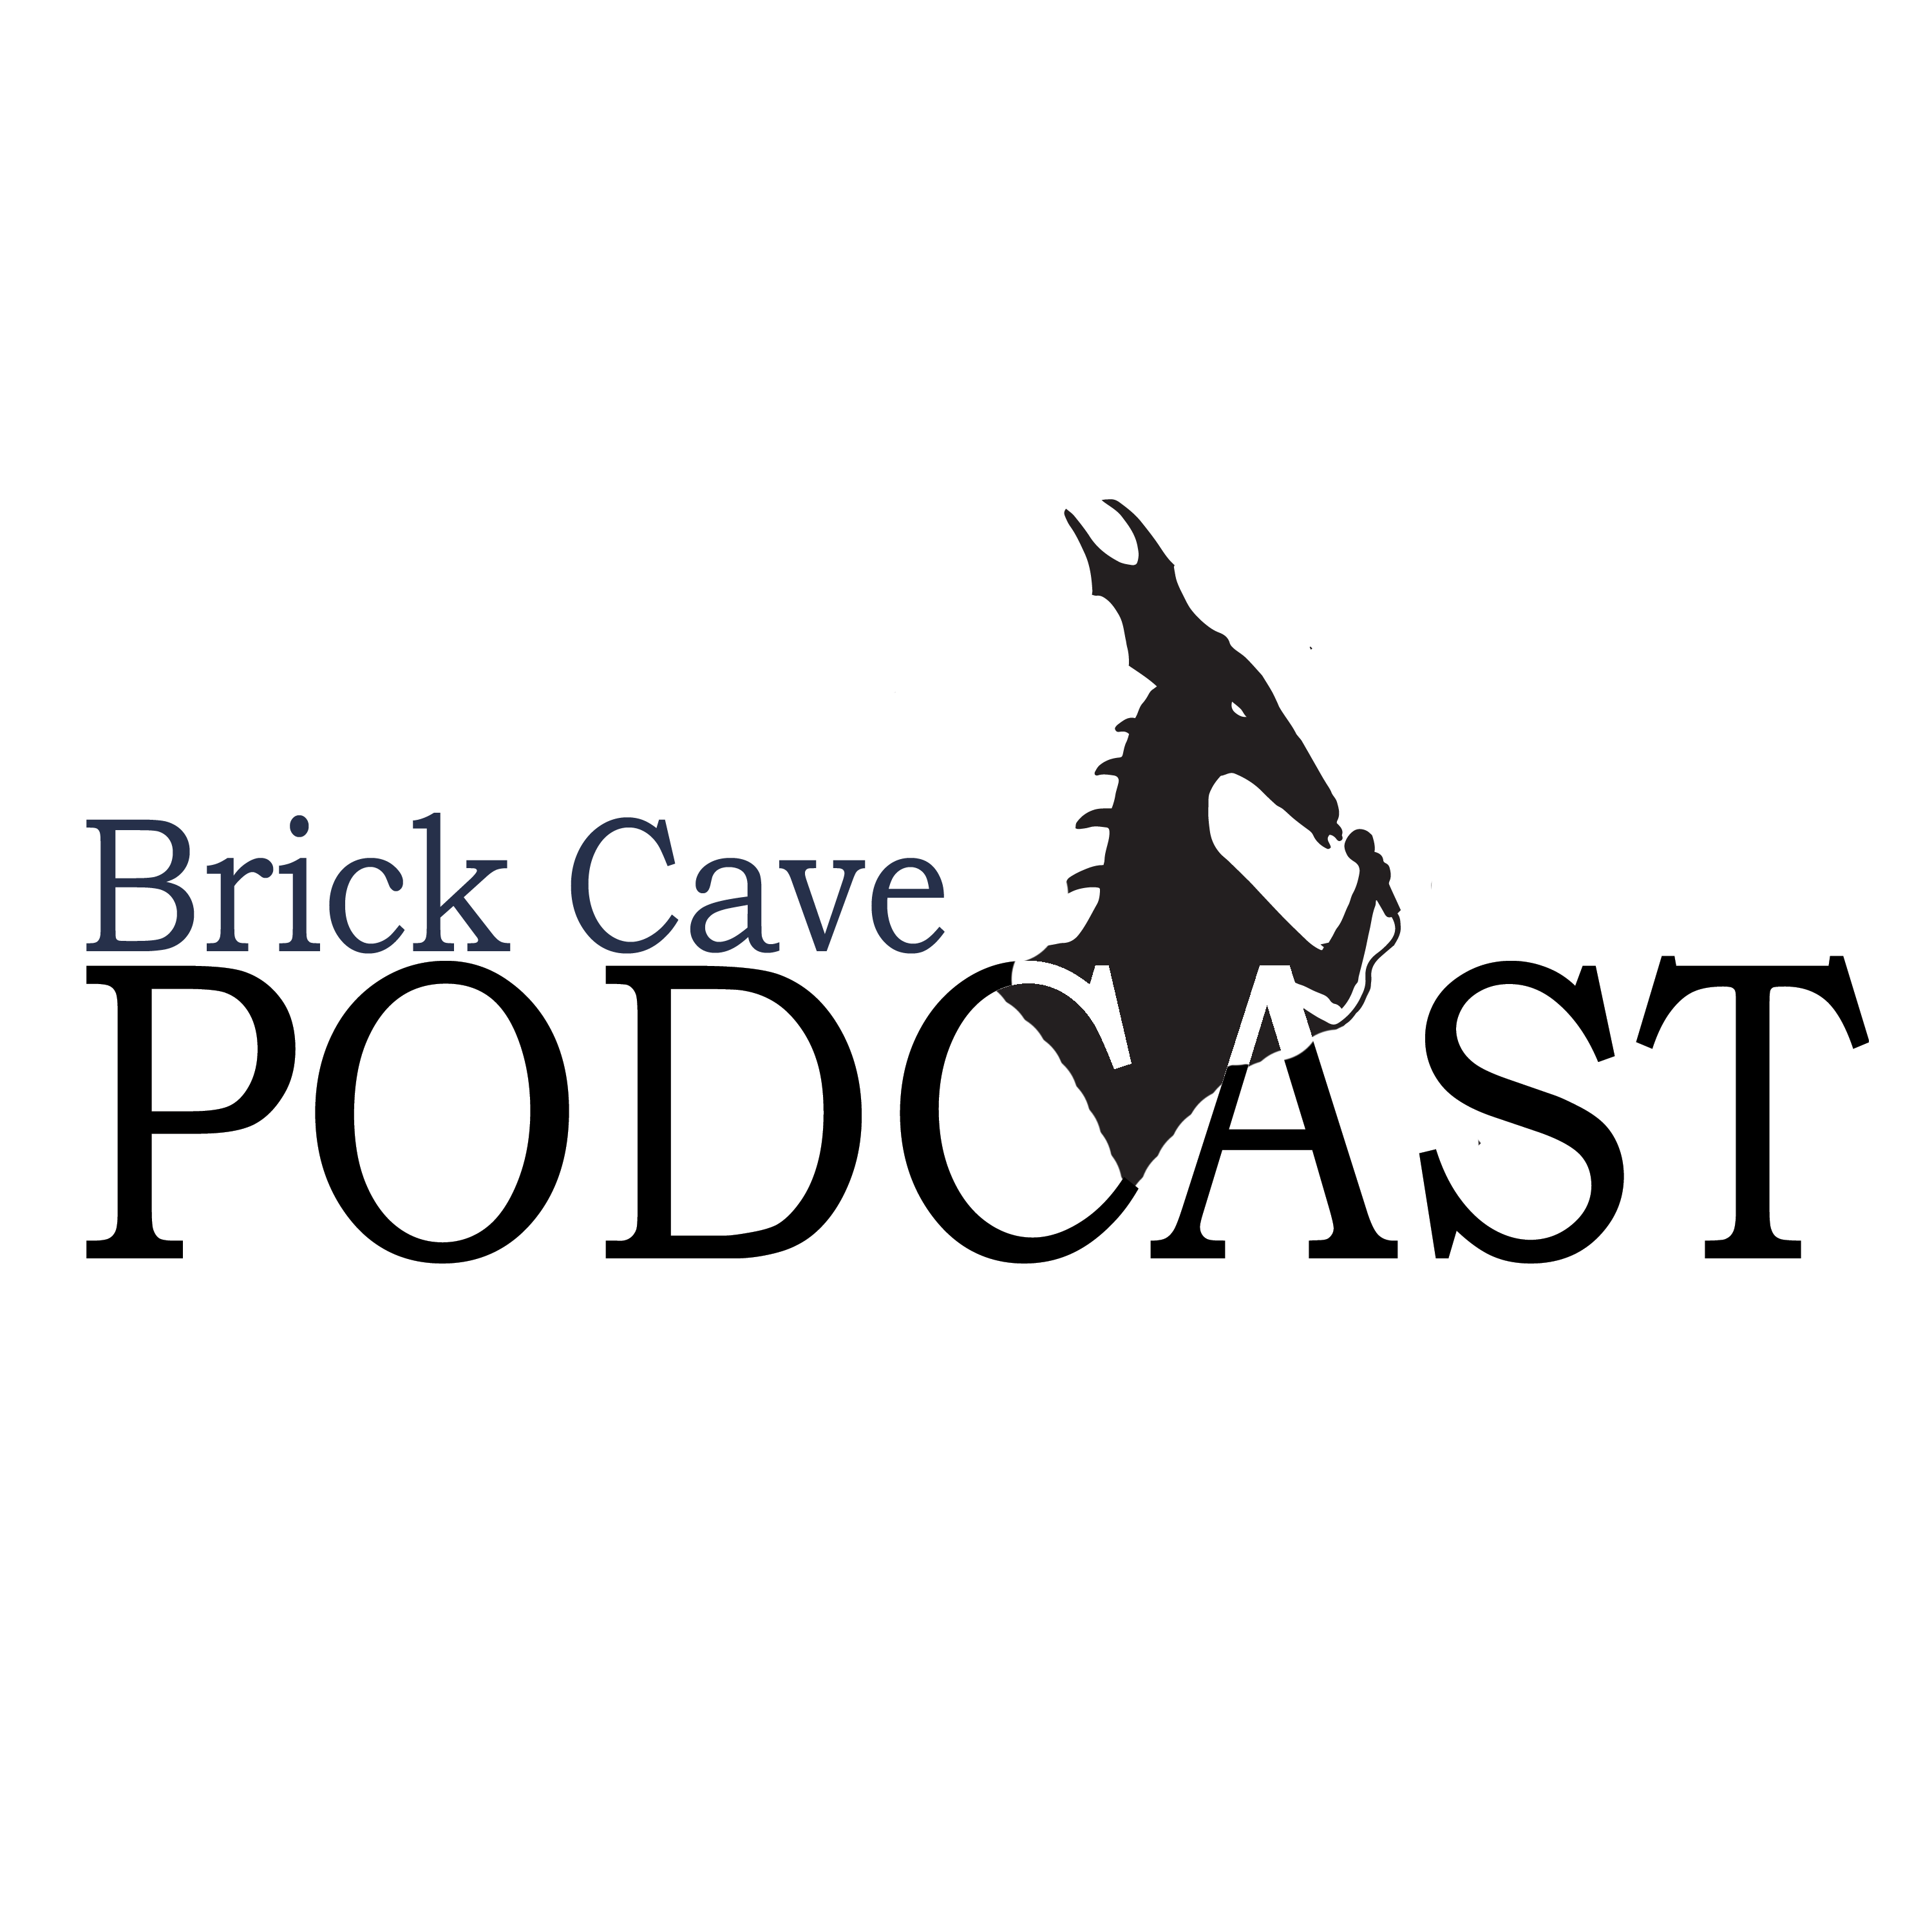 The September 2020 Brick Cave Podcast Episode